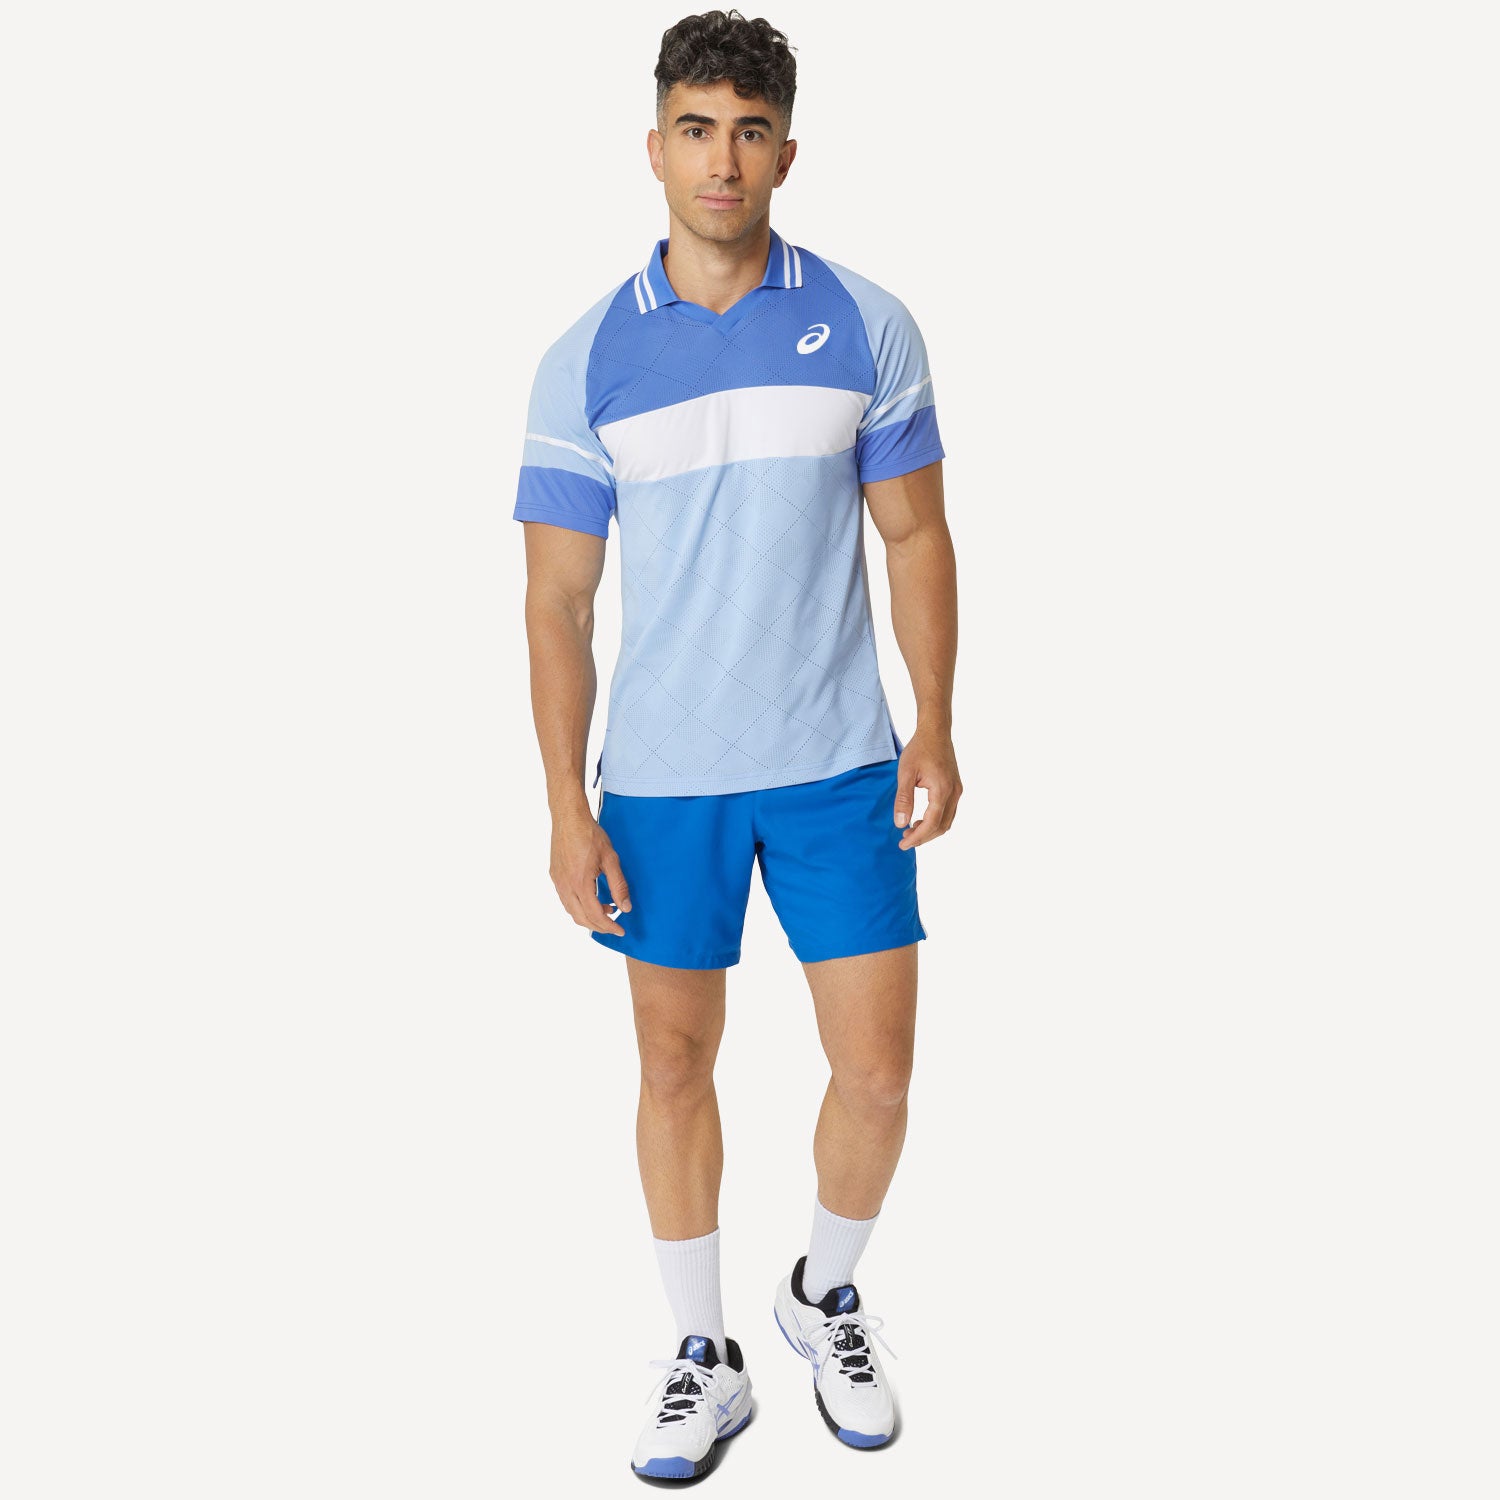 ASICS Match Men's Tennis Polo - Blue (8)